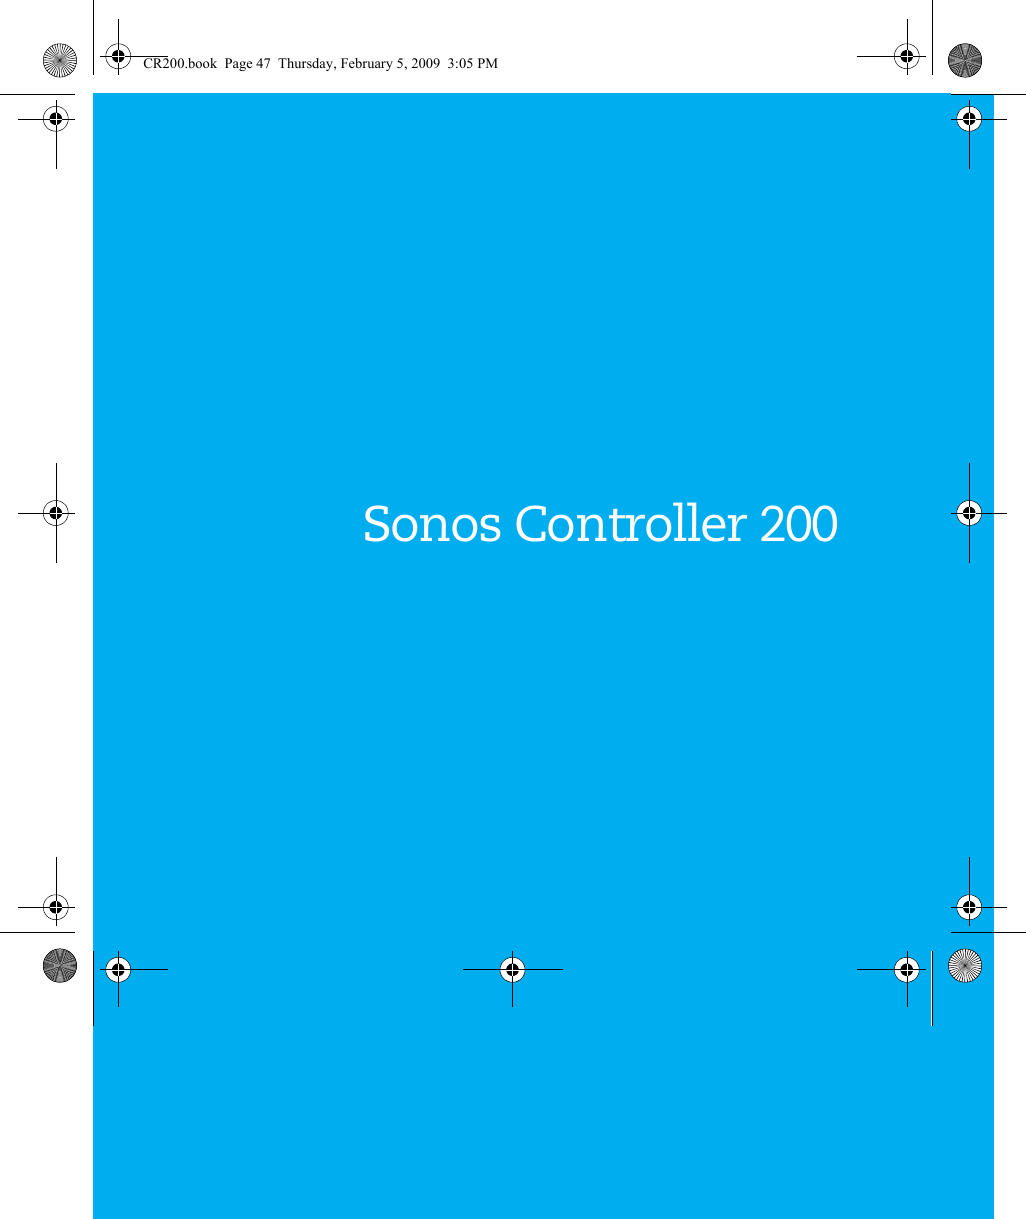 Sonos Controller 200CR200.book  Page 47  Thursday, February 5, 2009  3:05 PM